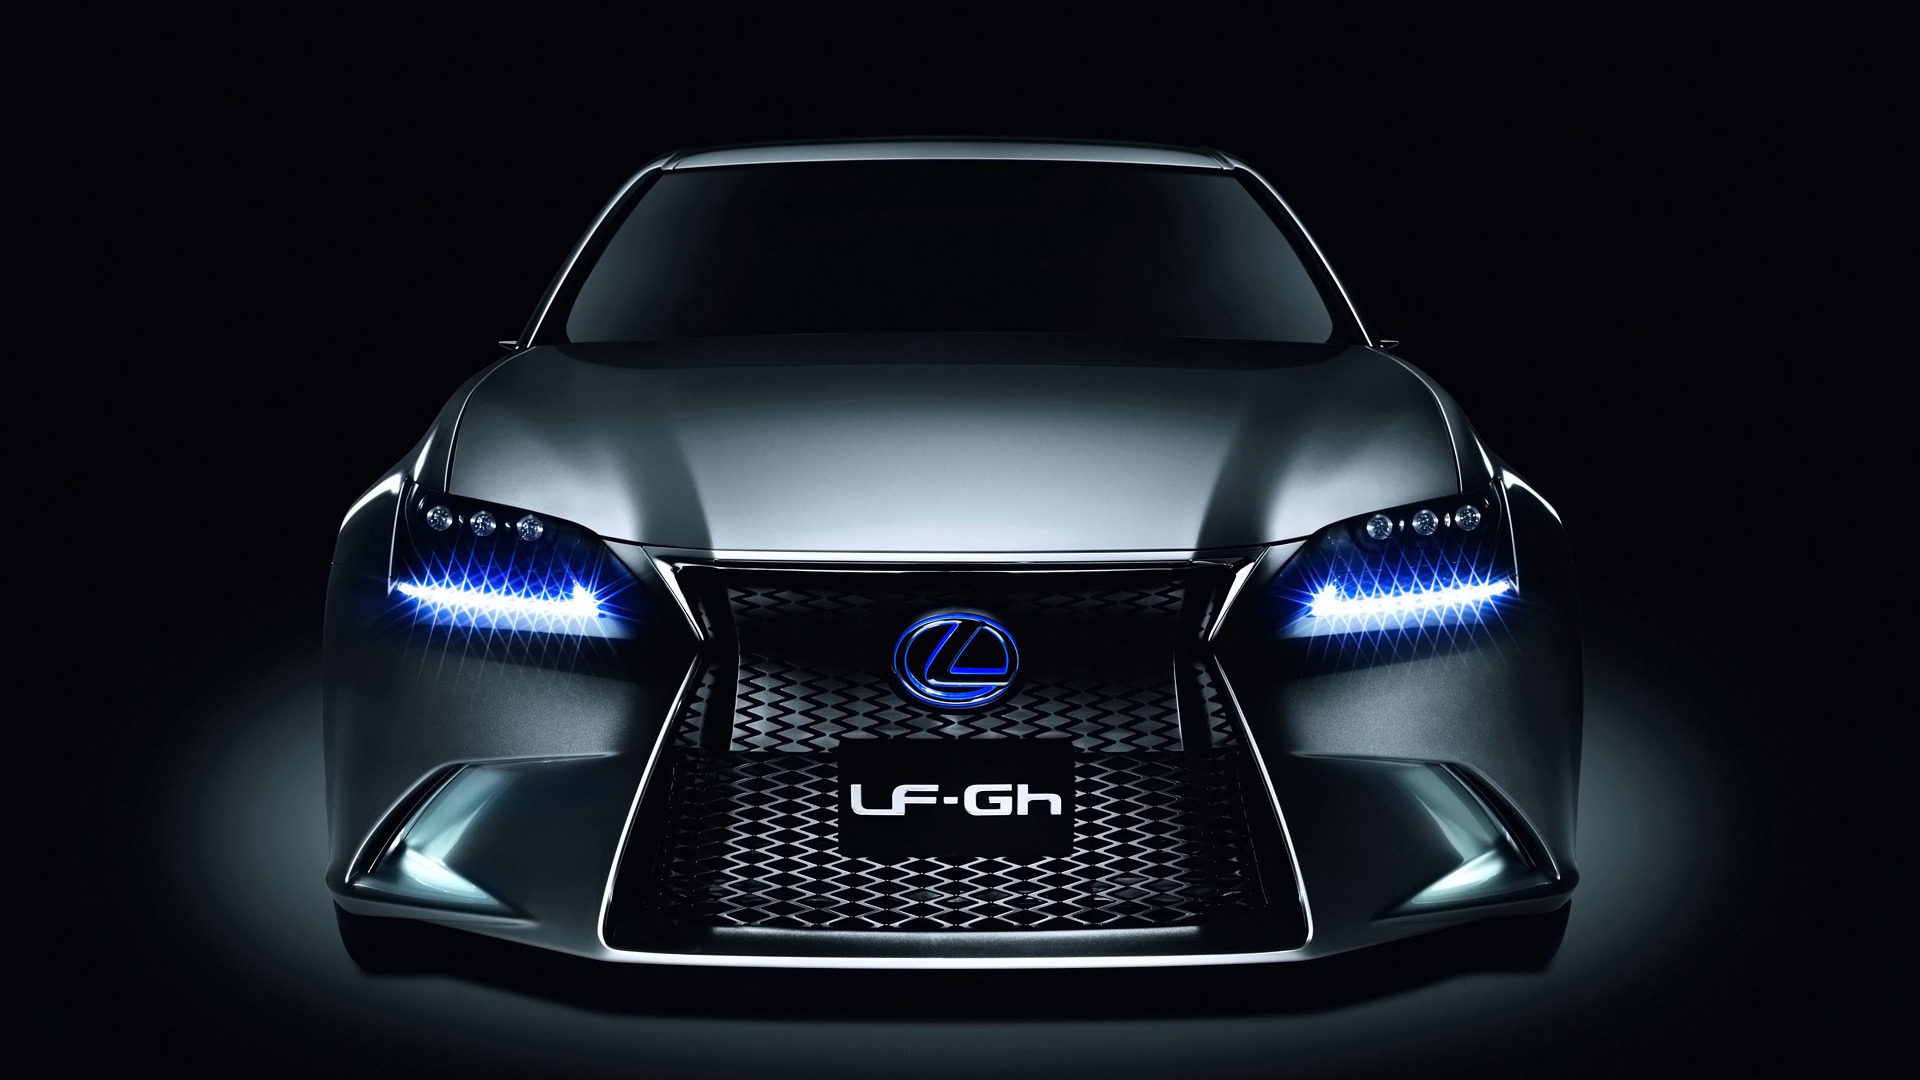 Lexus LF-Gh Hybrid Concept Front for 1920 x 1080 HDTV 1080p resolution